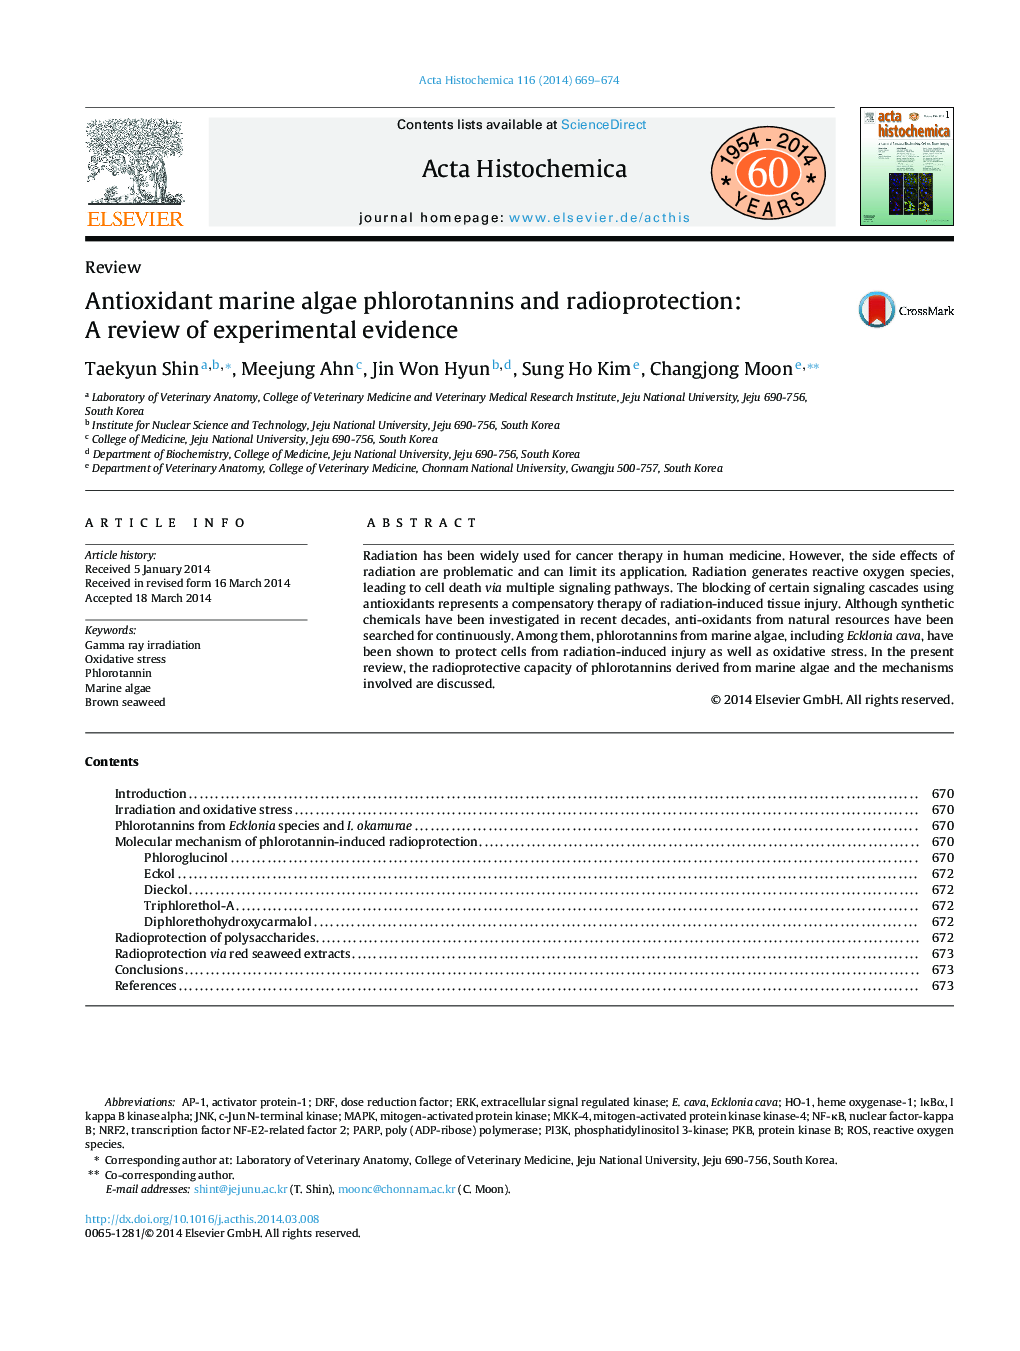 Antioxidant marine algae phlorotannins and radioprotection: A review of experimental evidence